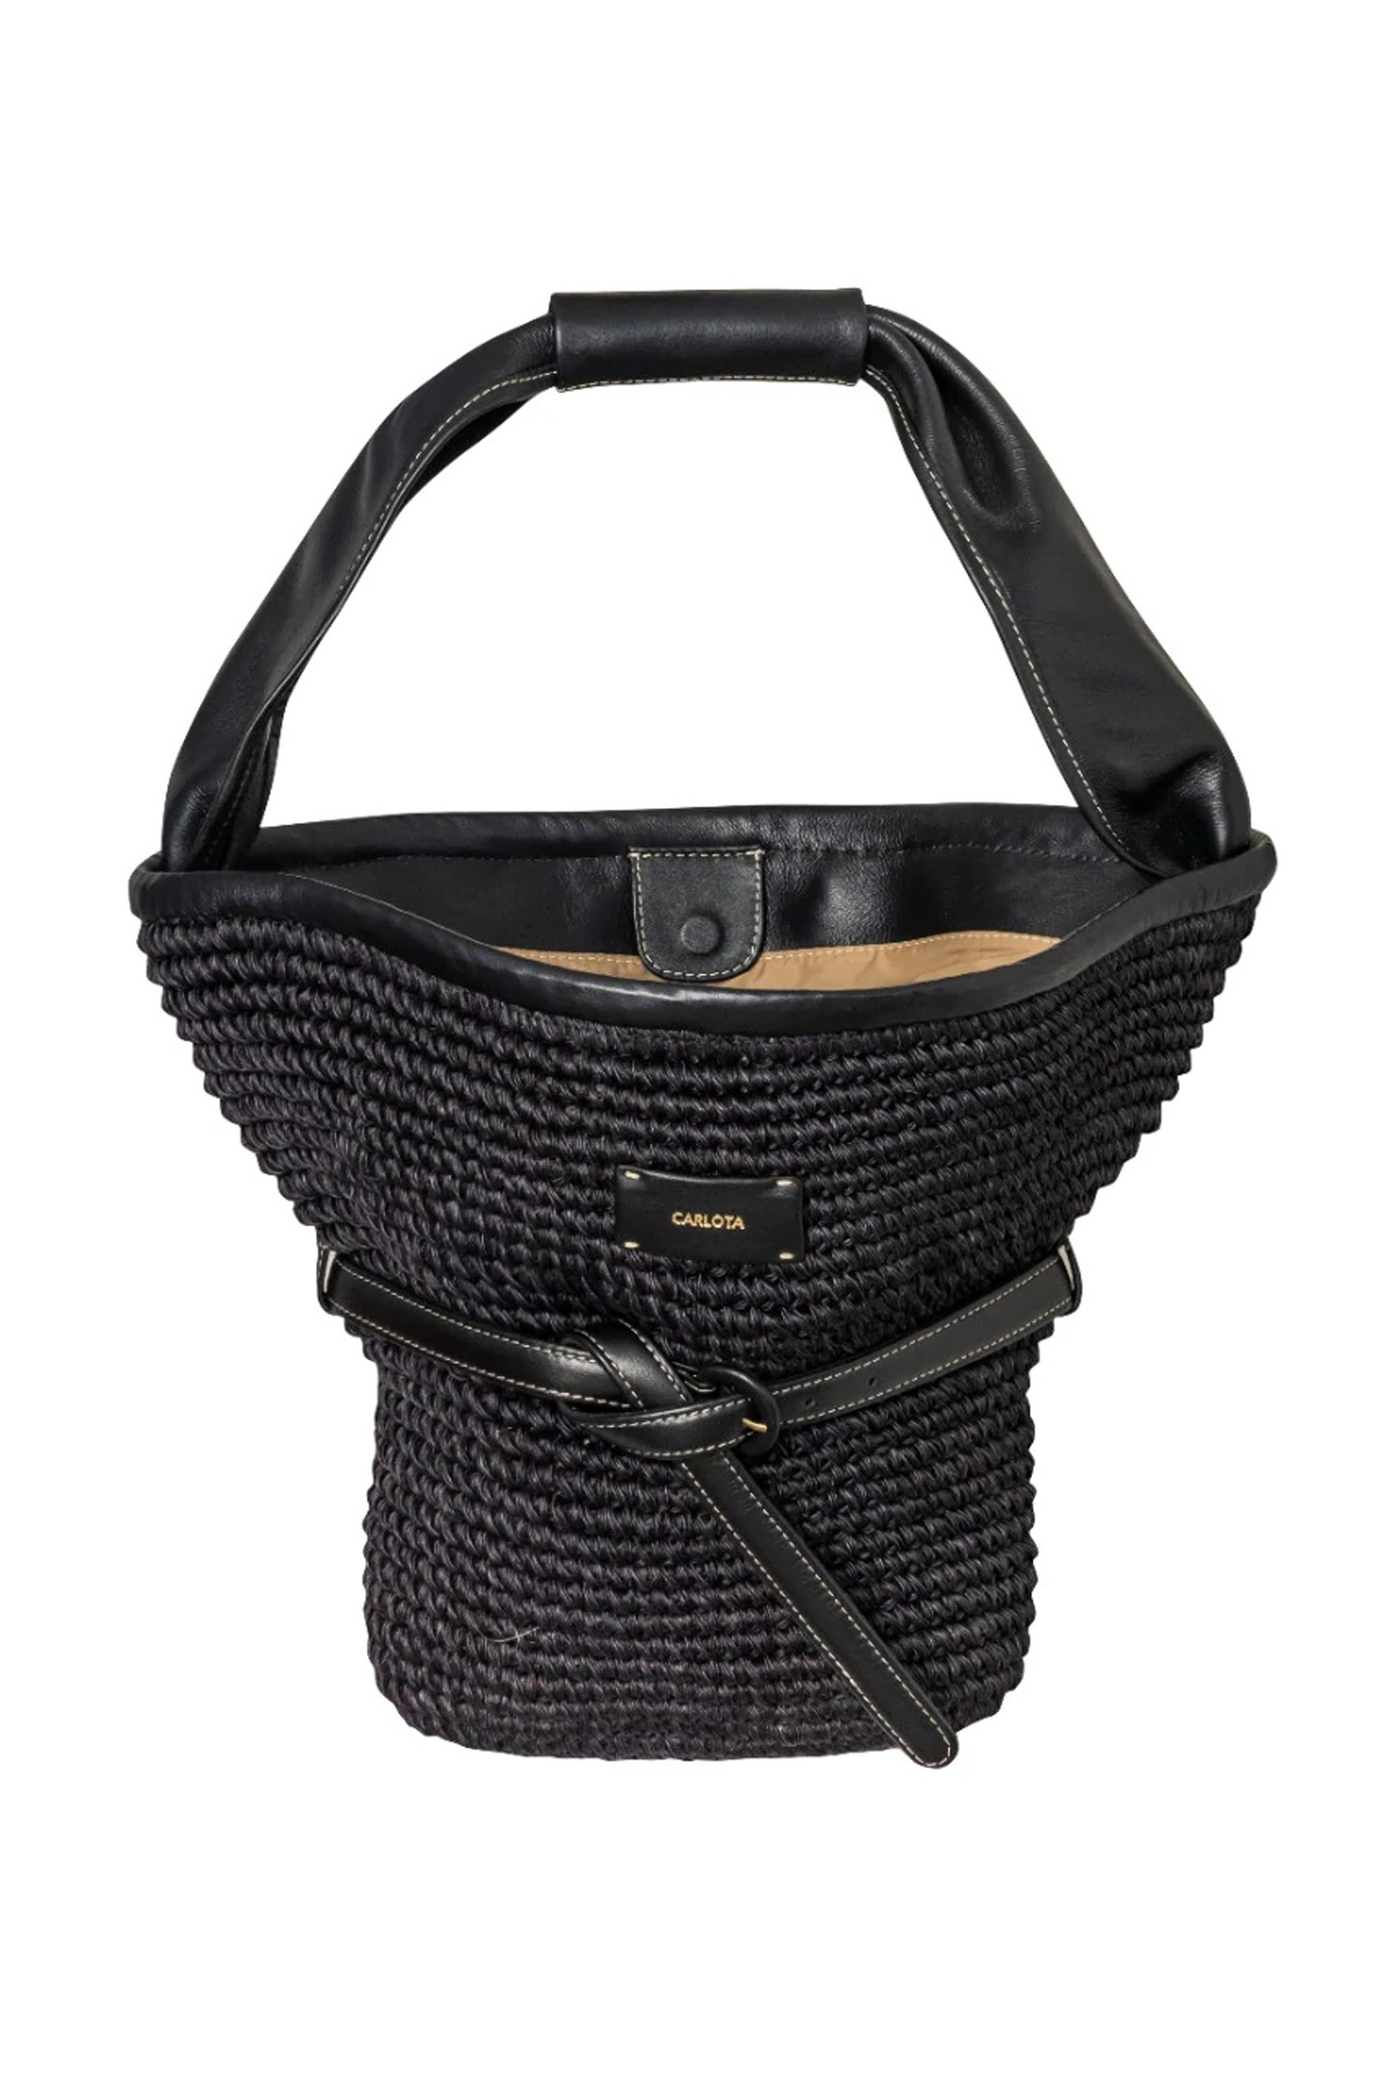 carlota: bonnet figue top handle bag with calfskin leather knot belt detail